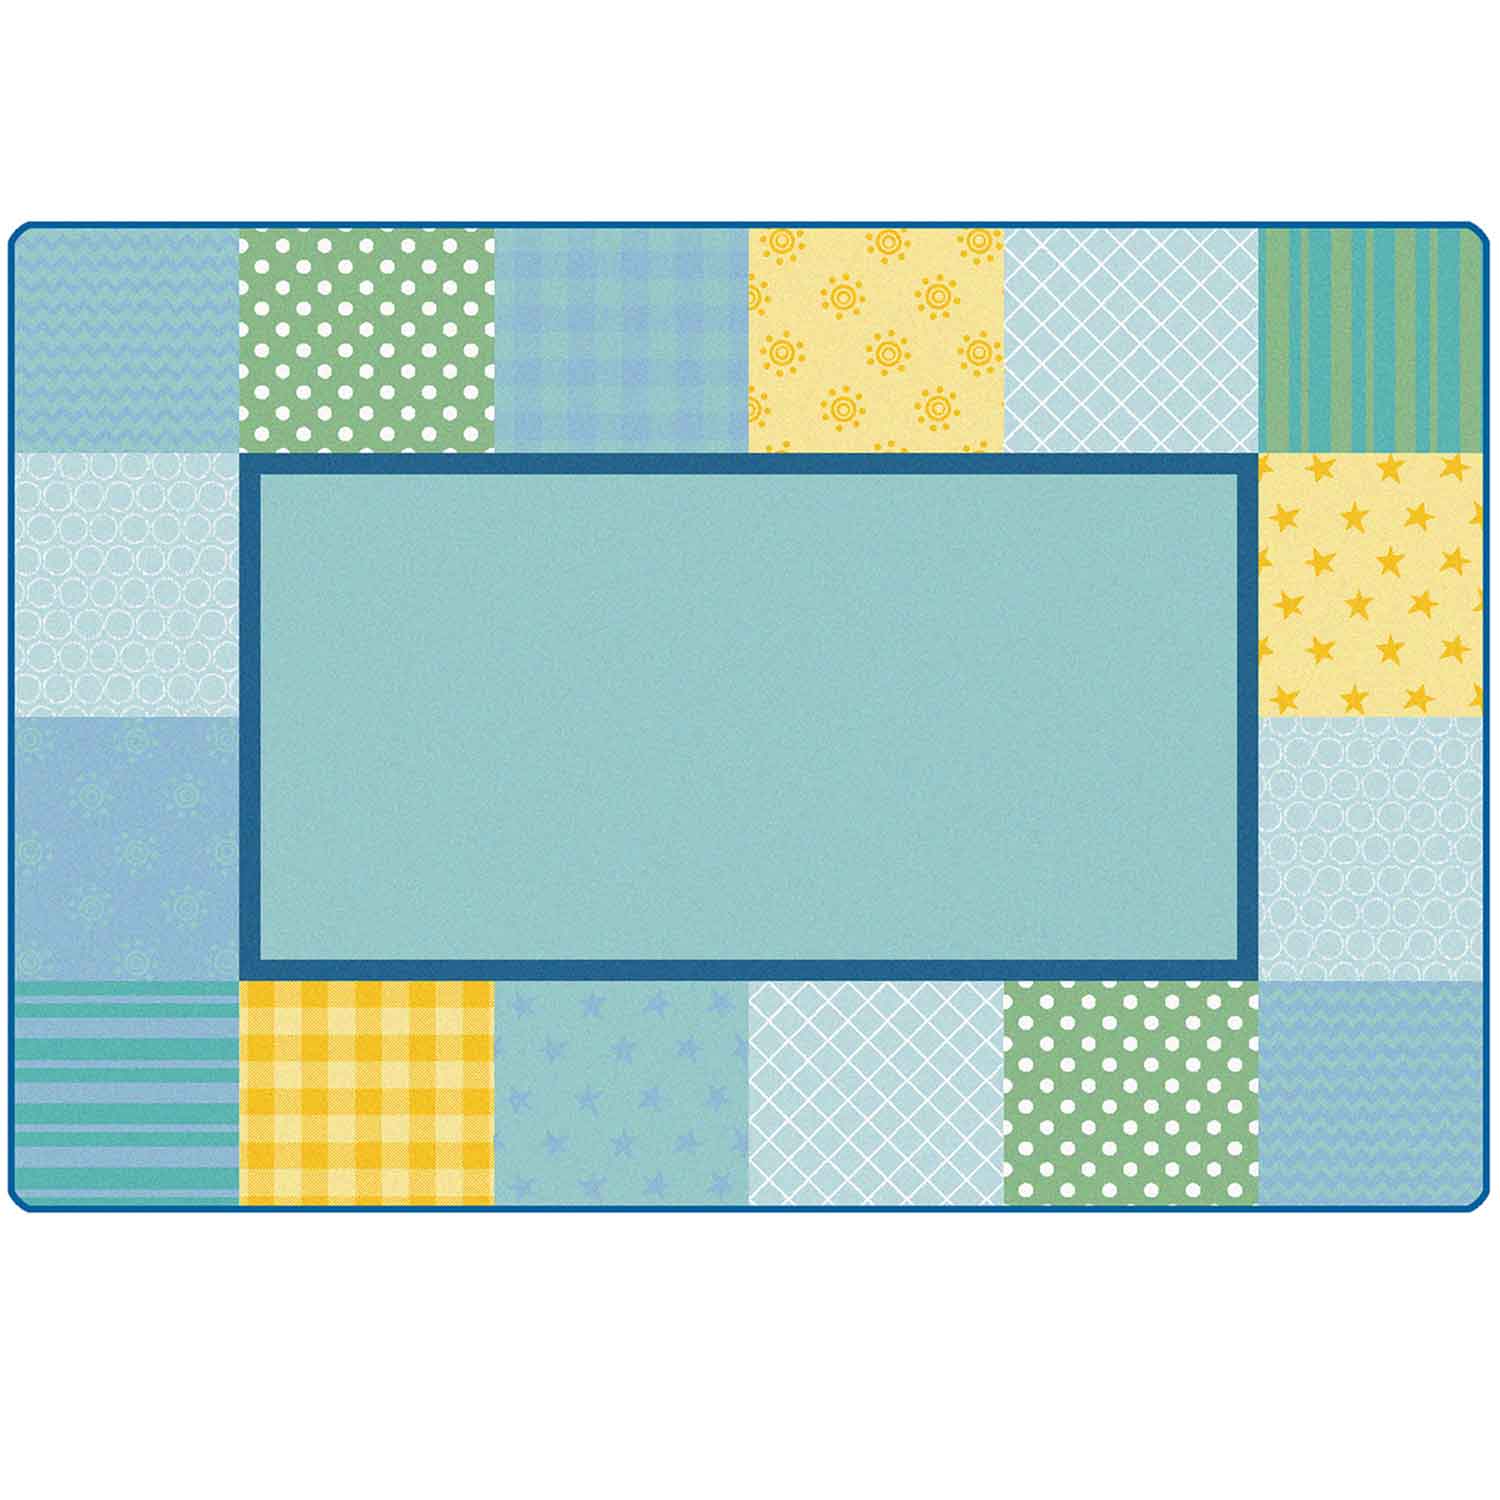 KIDSoft™ Pattern Blocks Rug, Soft Colors, Rectangle 8' x 12'